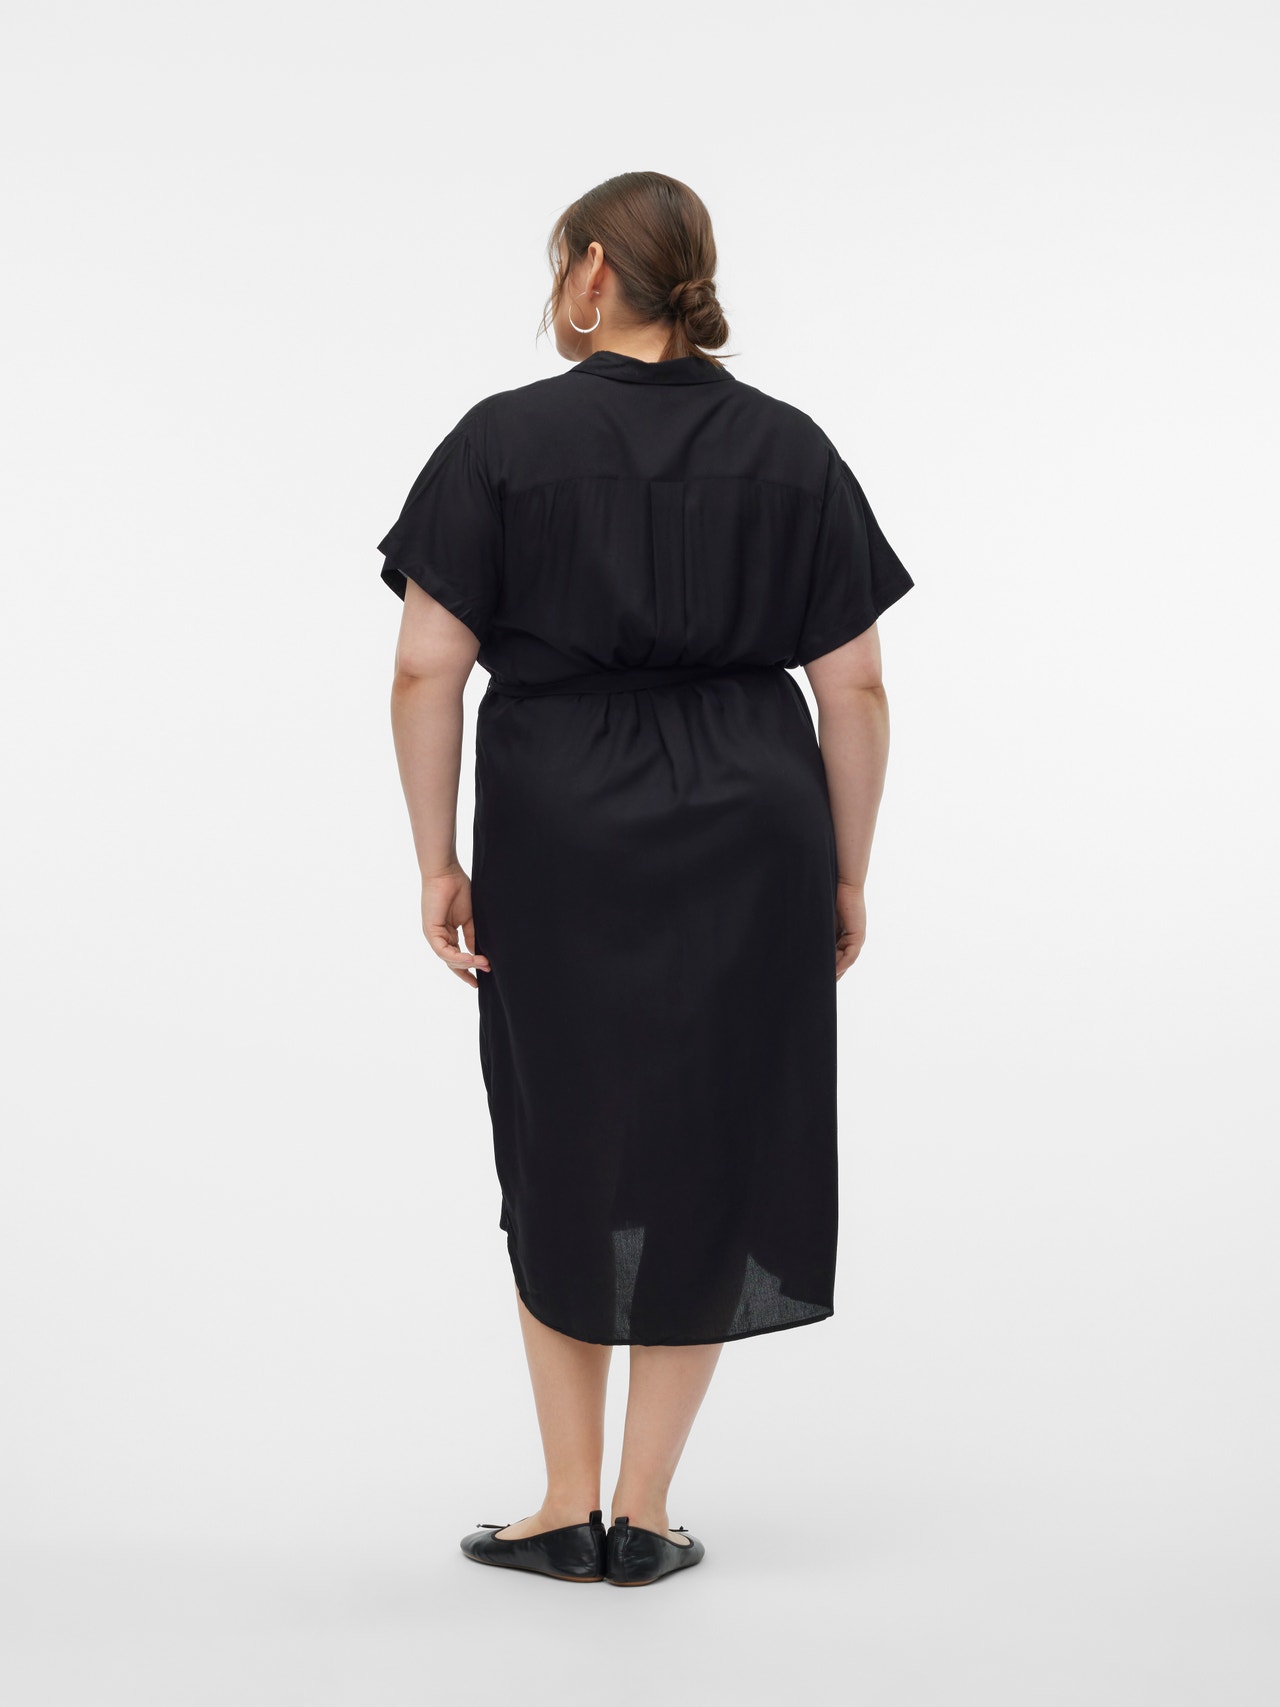 Vero Moda VMBUMPY Long dress -Black - 10288805